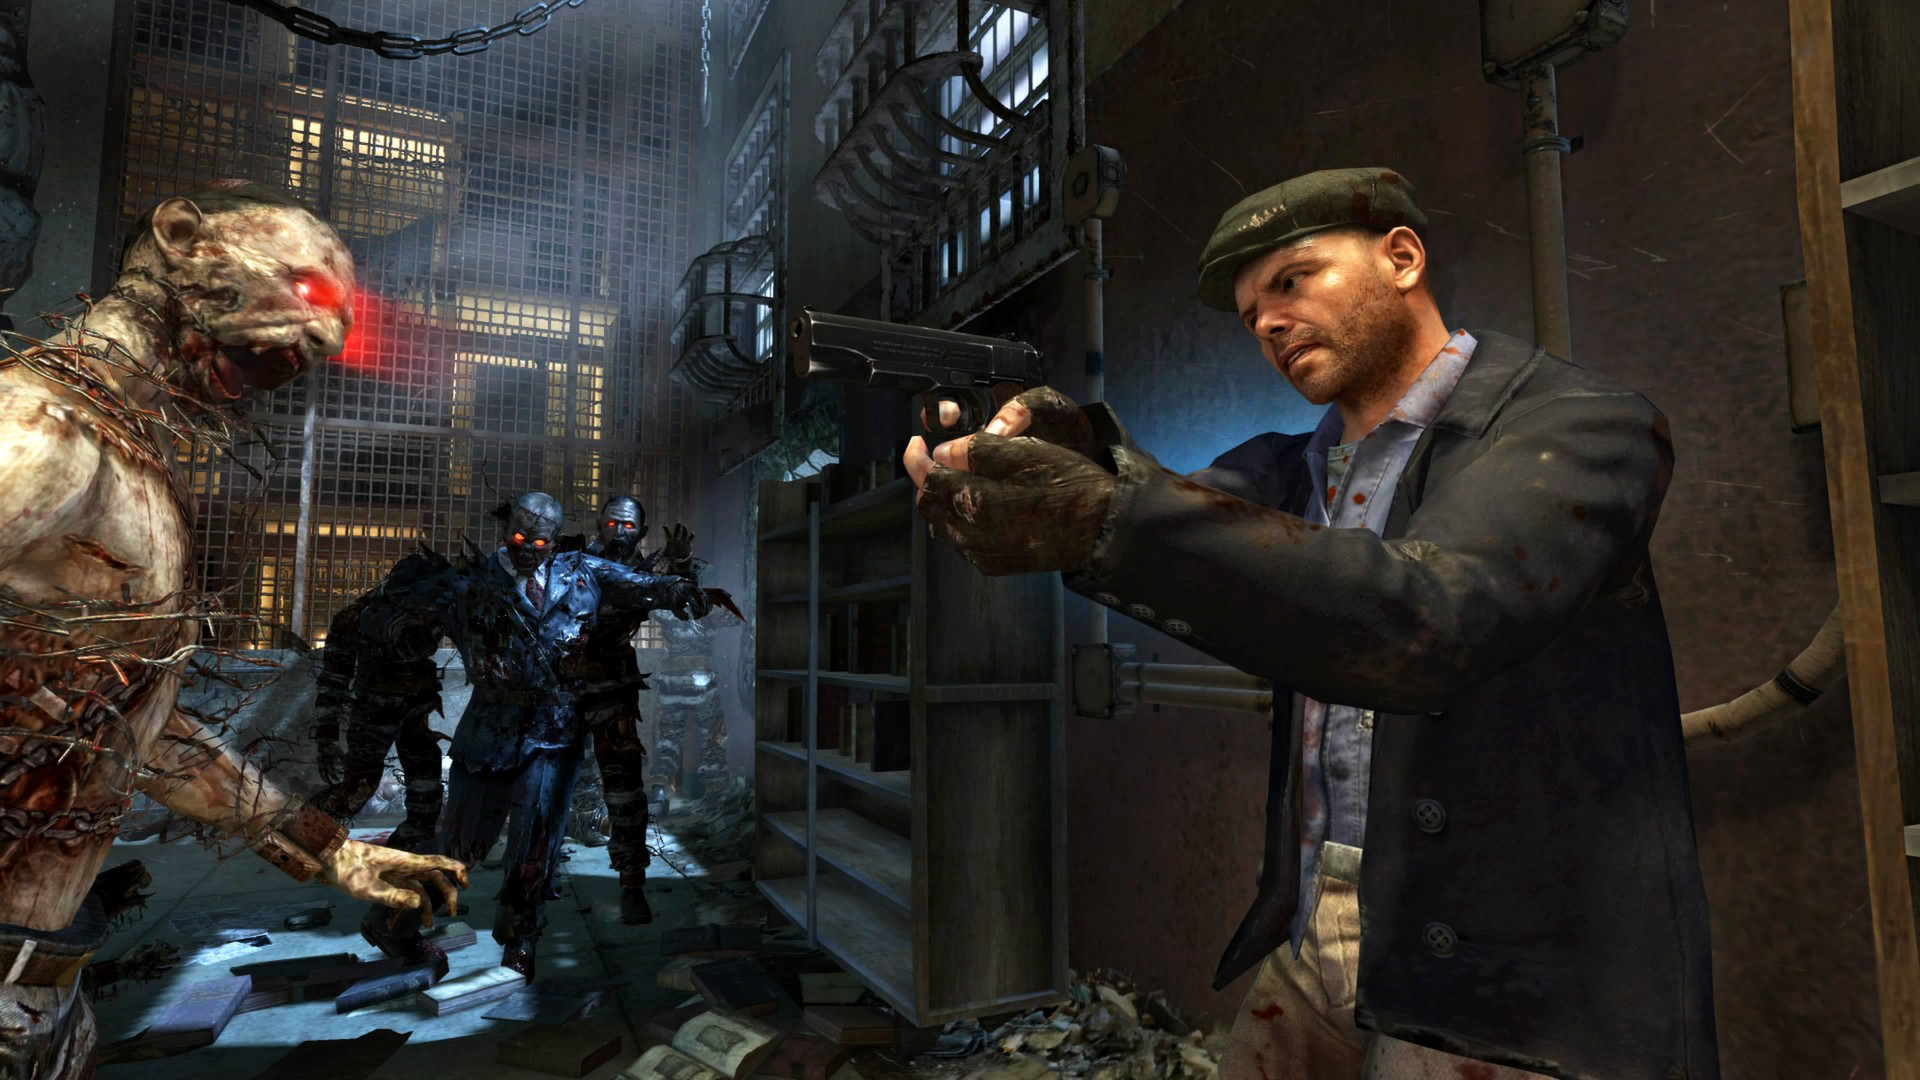 CoD: Black Ops II - Uprising DLC (Steam Gift RegFree)